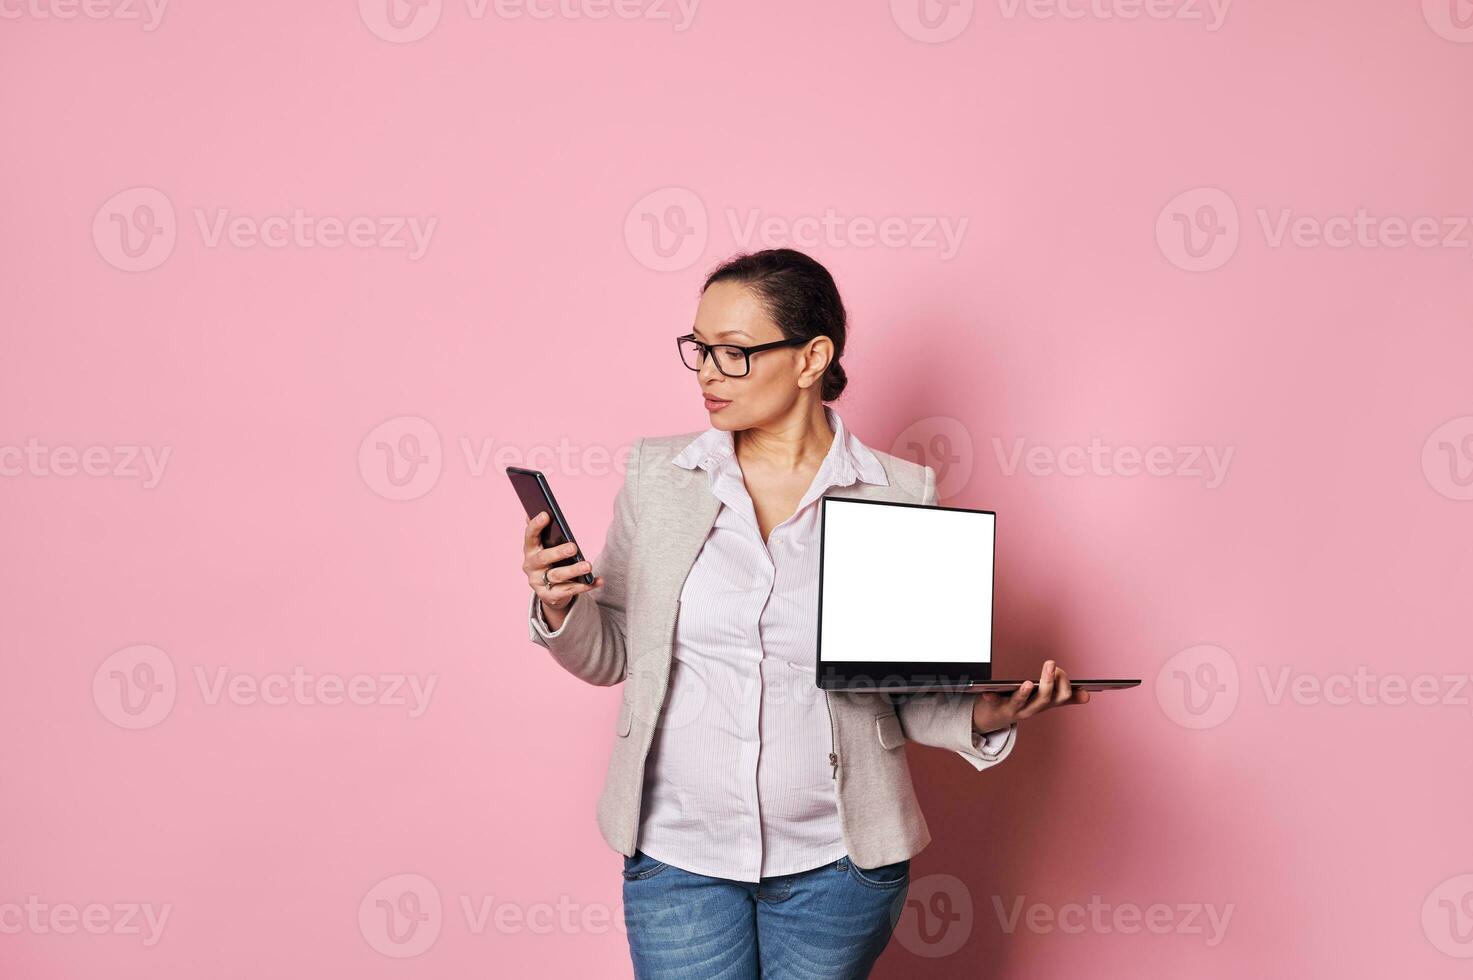 multitasking zwanger vrouw cheques smartphone, houdt laptop wit blanco scherm. mensen. zwangerschap. bedrijf. technologie foto